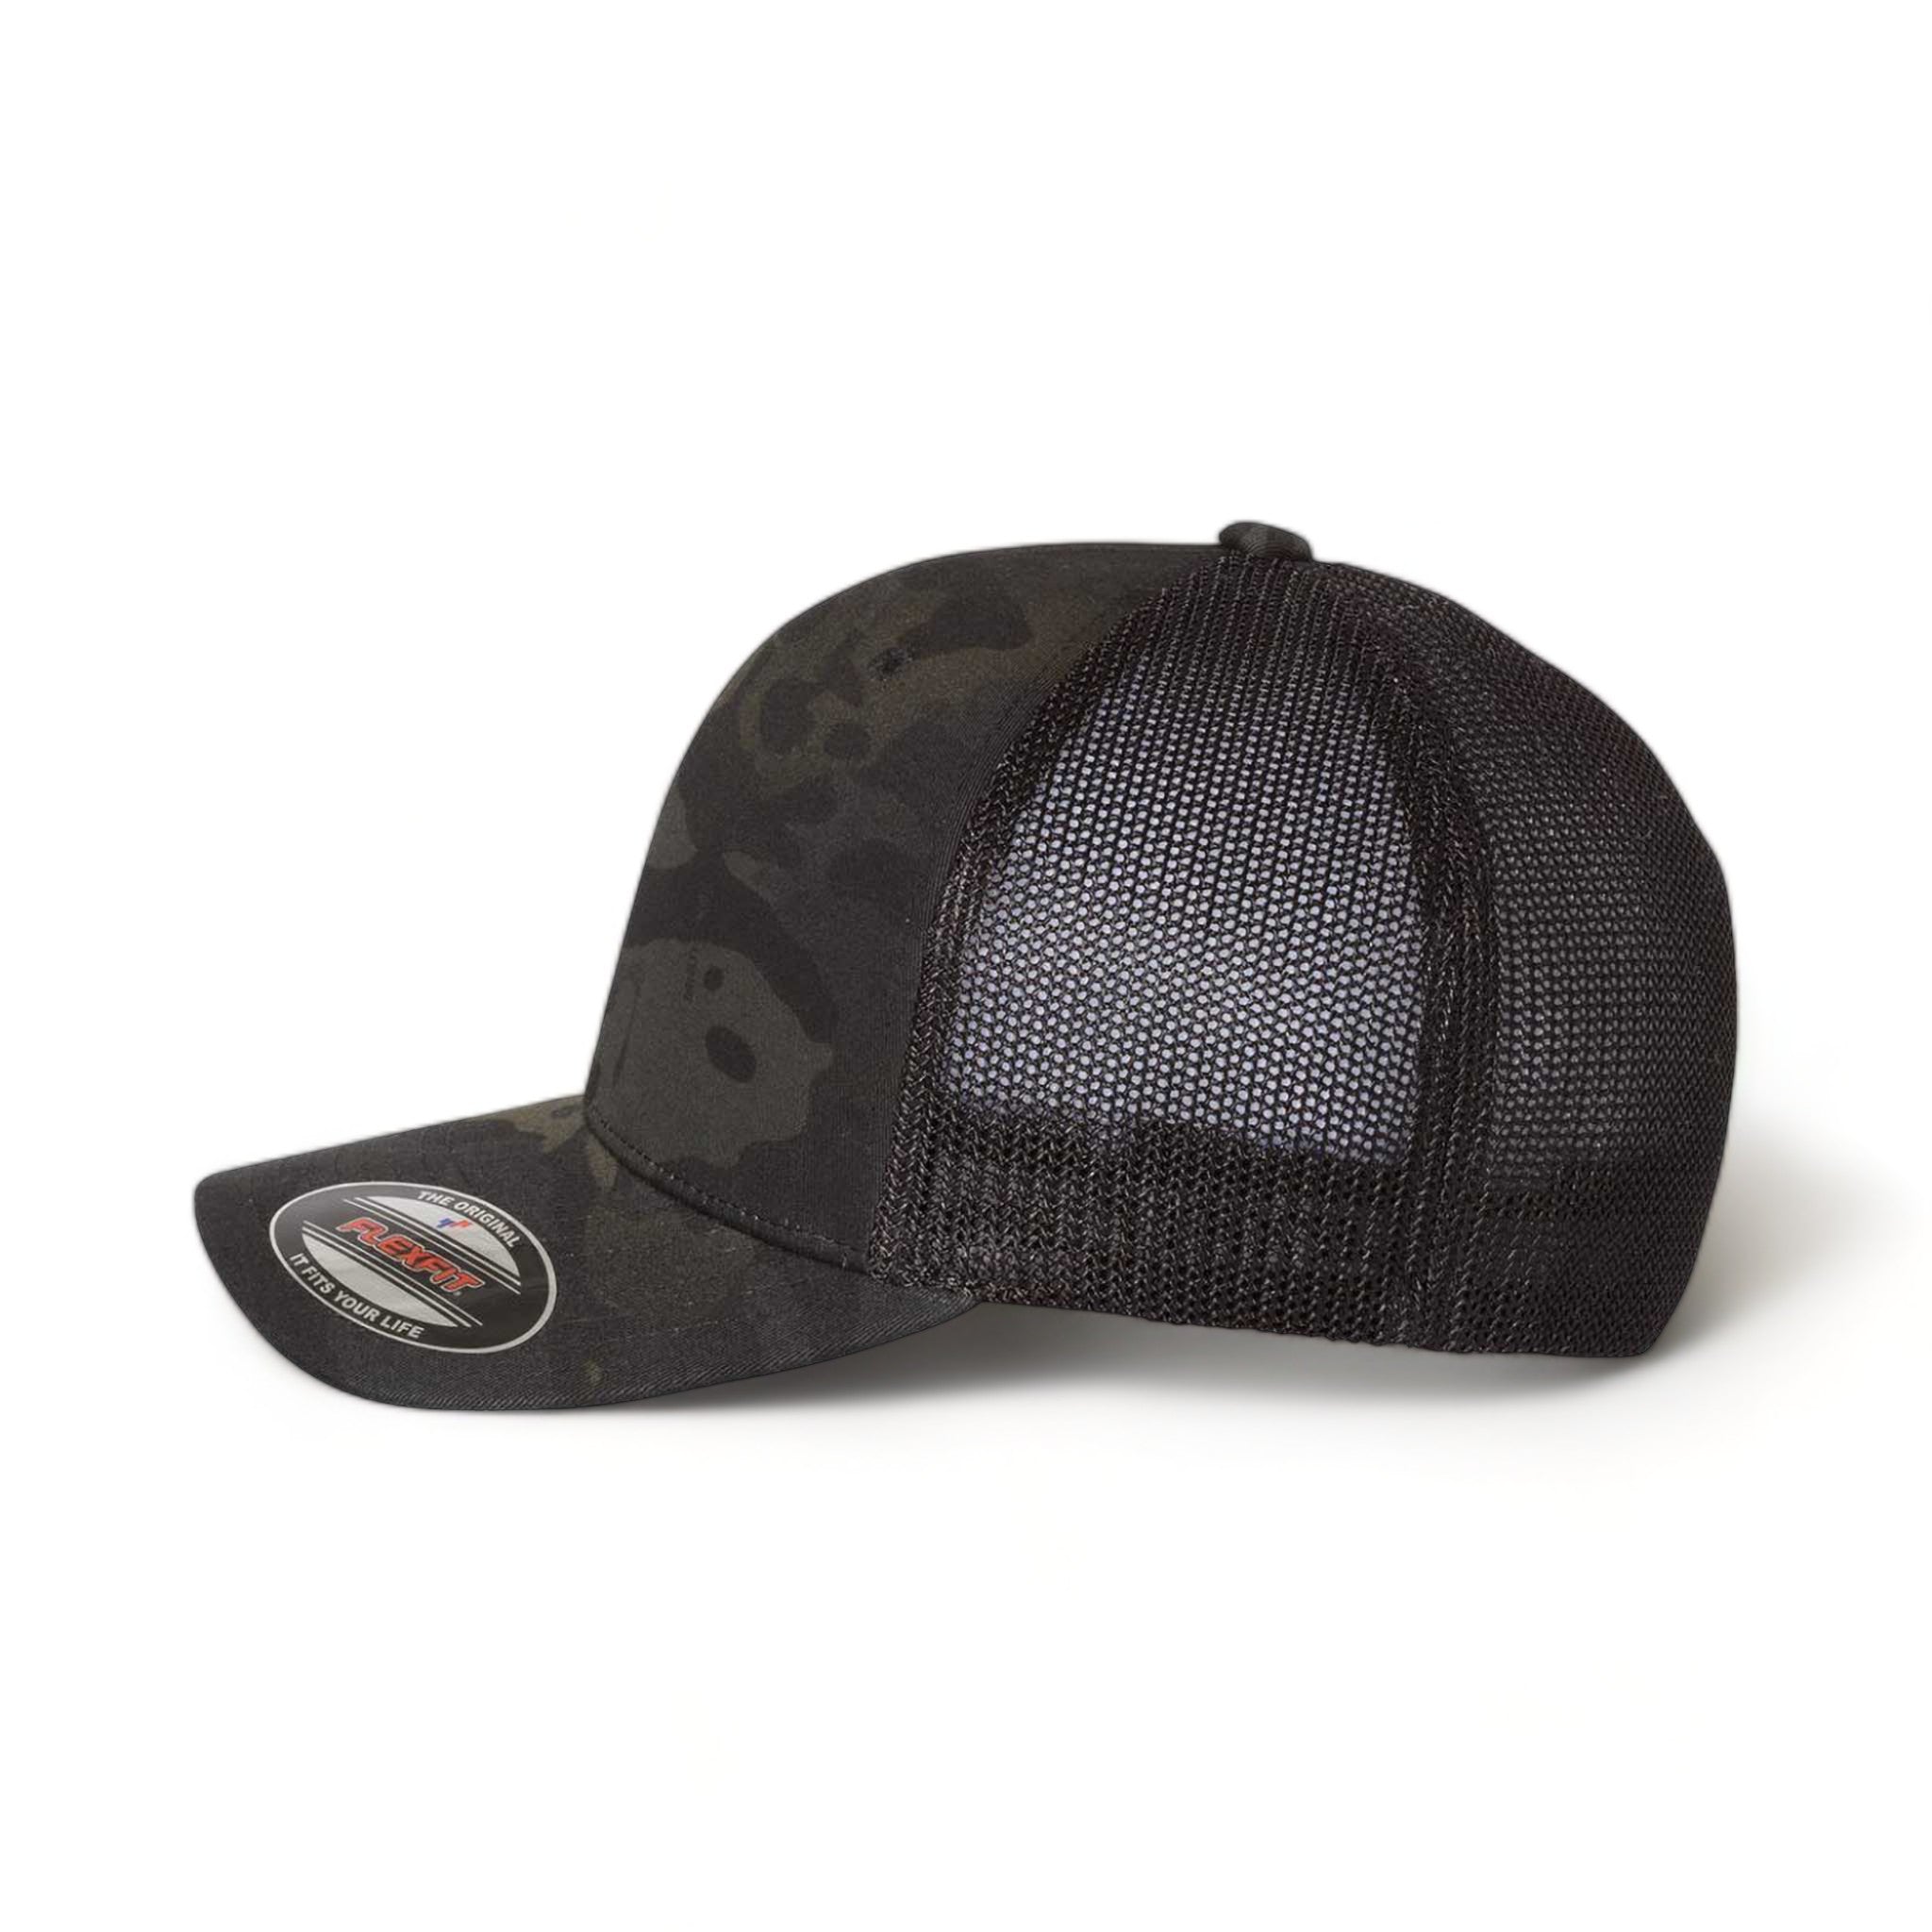 Side view of Flexfit 6511 custom hat in multicam black and black